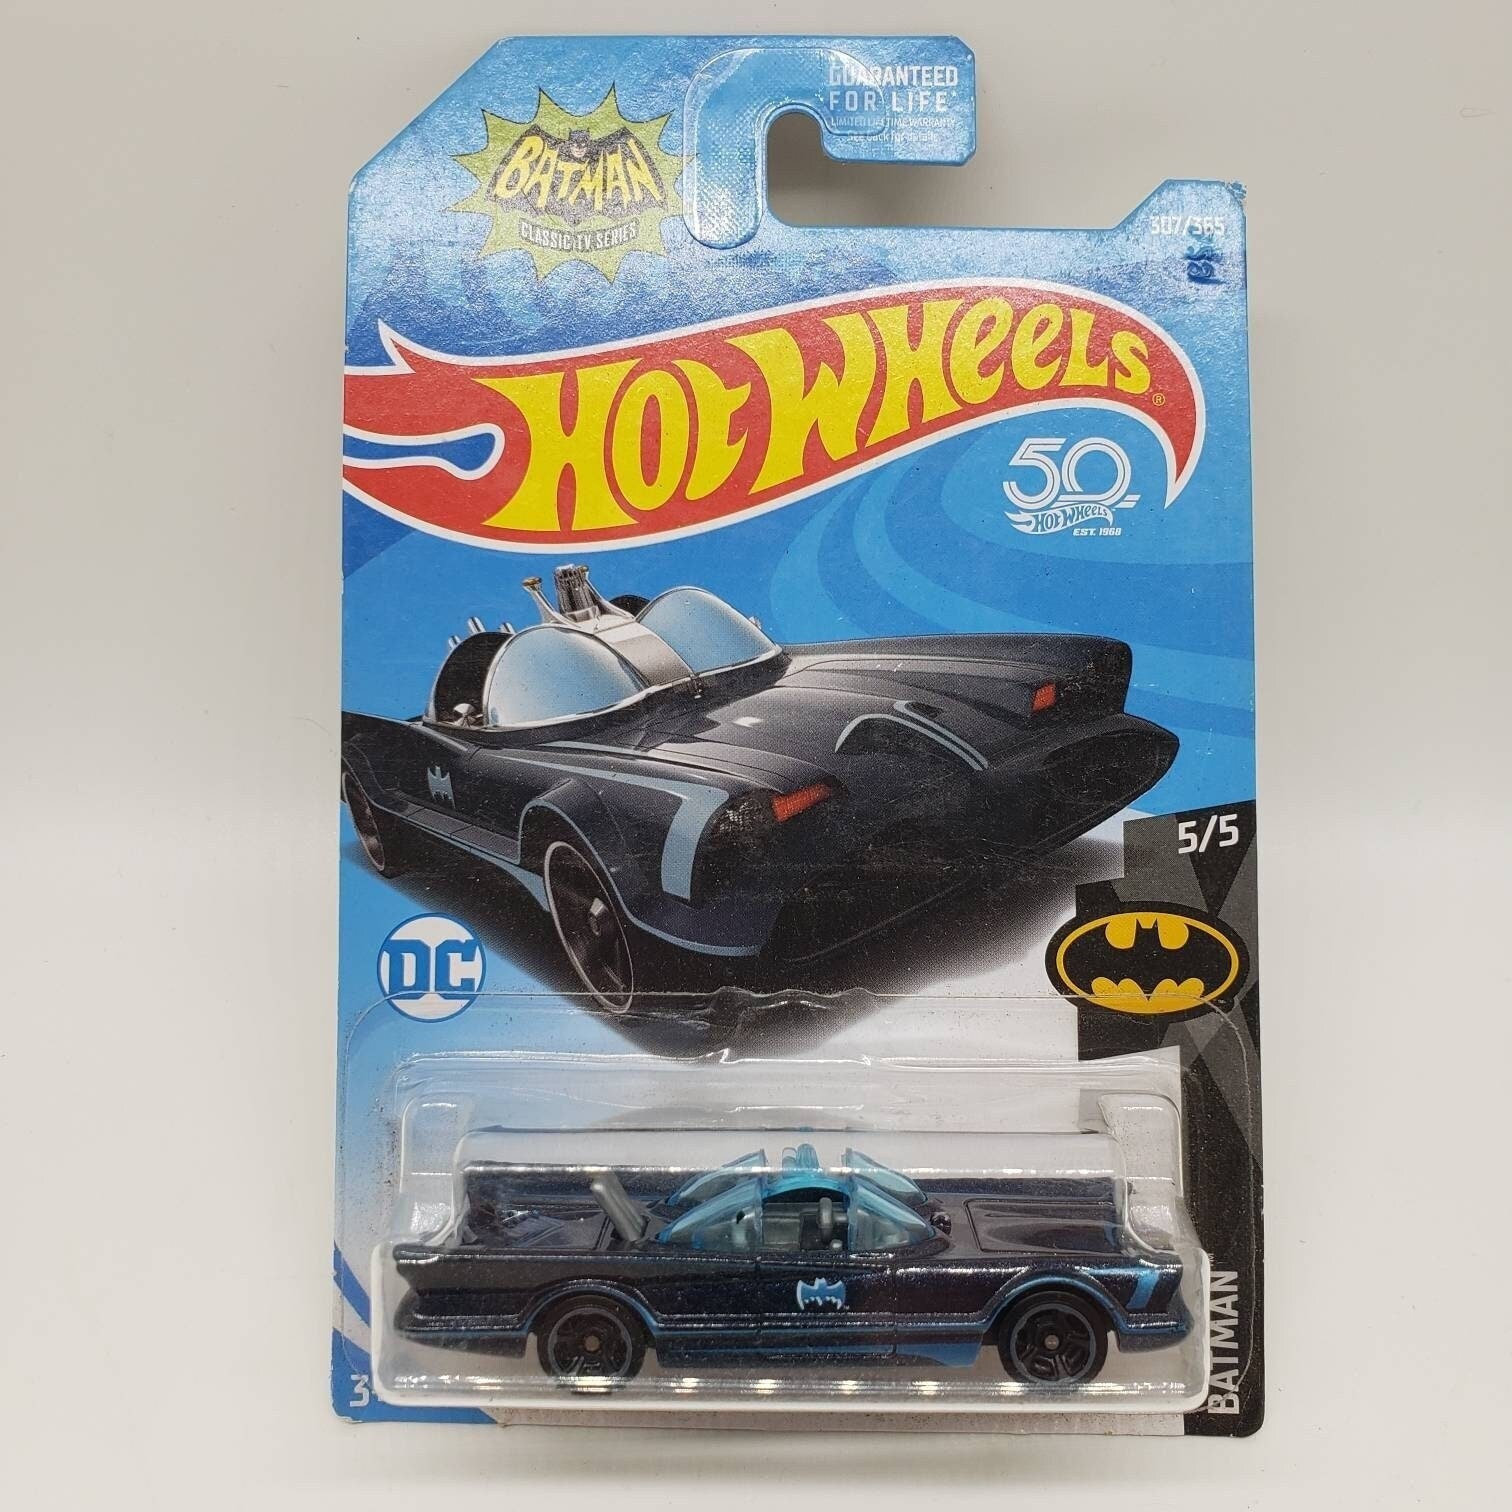 Hot Wheels – Tv Series Batmobile – Dc – Limited Co.